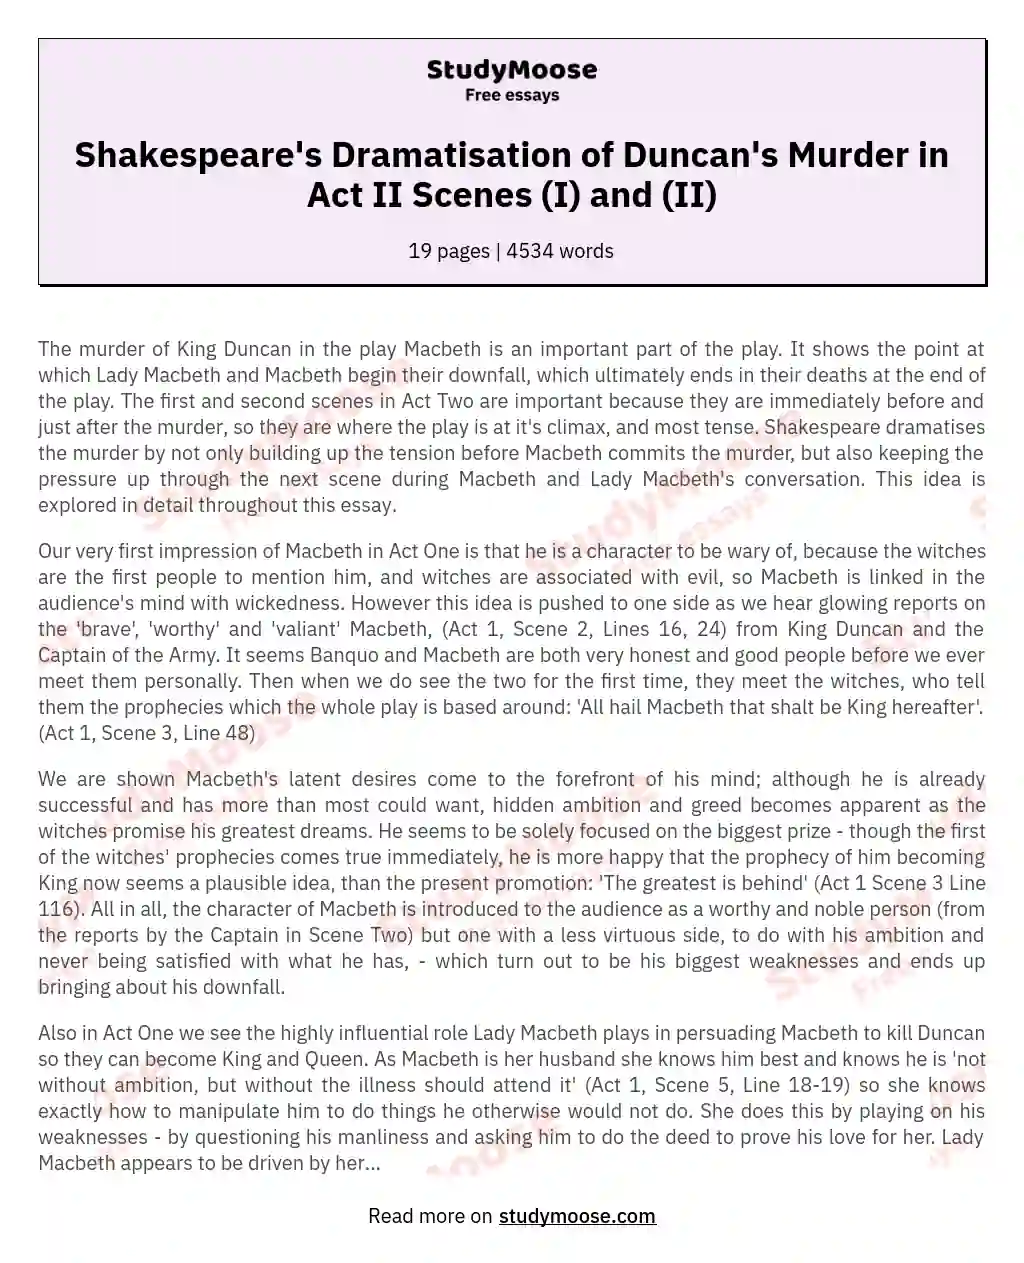 Shakespeare's Dramatisation of Duncan's Murder in Act II Scenes (I) and (II) essay